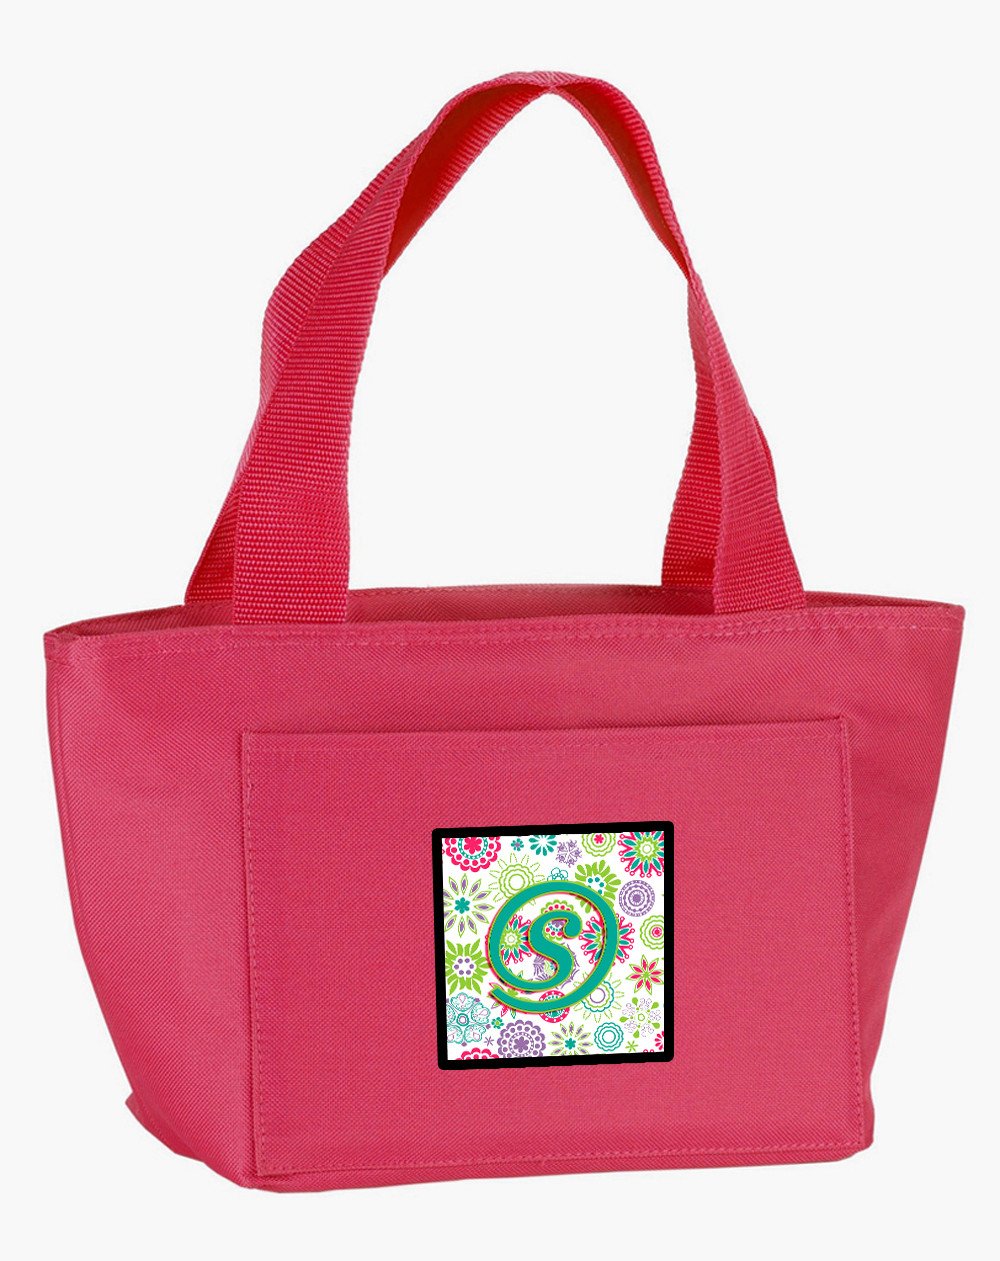 Letter S Flowers Pink Teal Green Initial Lunch Bag CJ2011-SPK-8808 by Caroline's Treasures